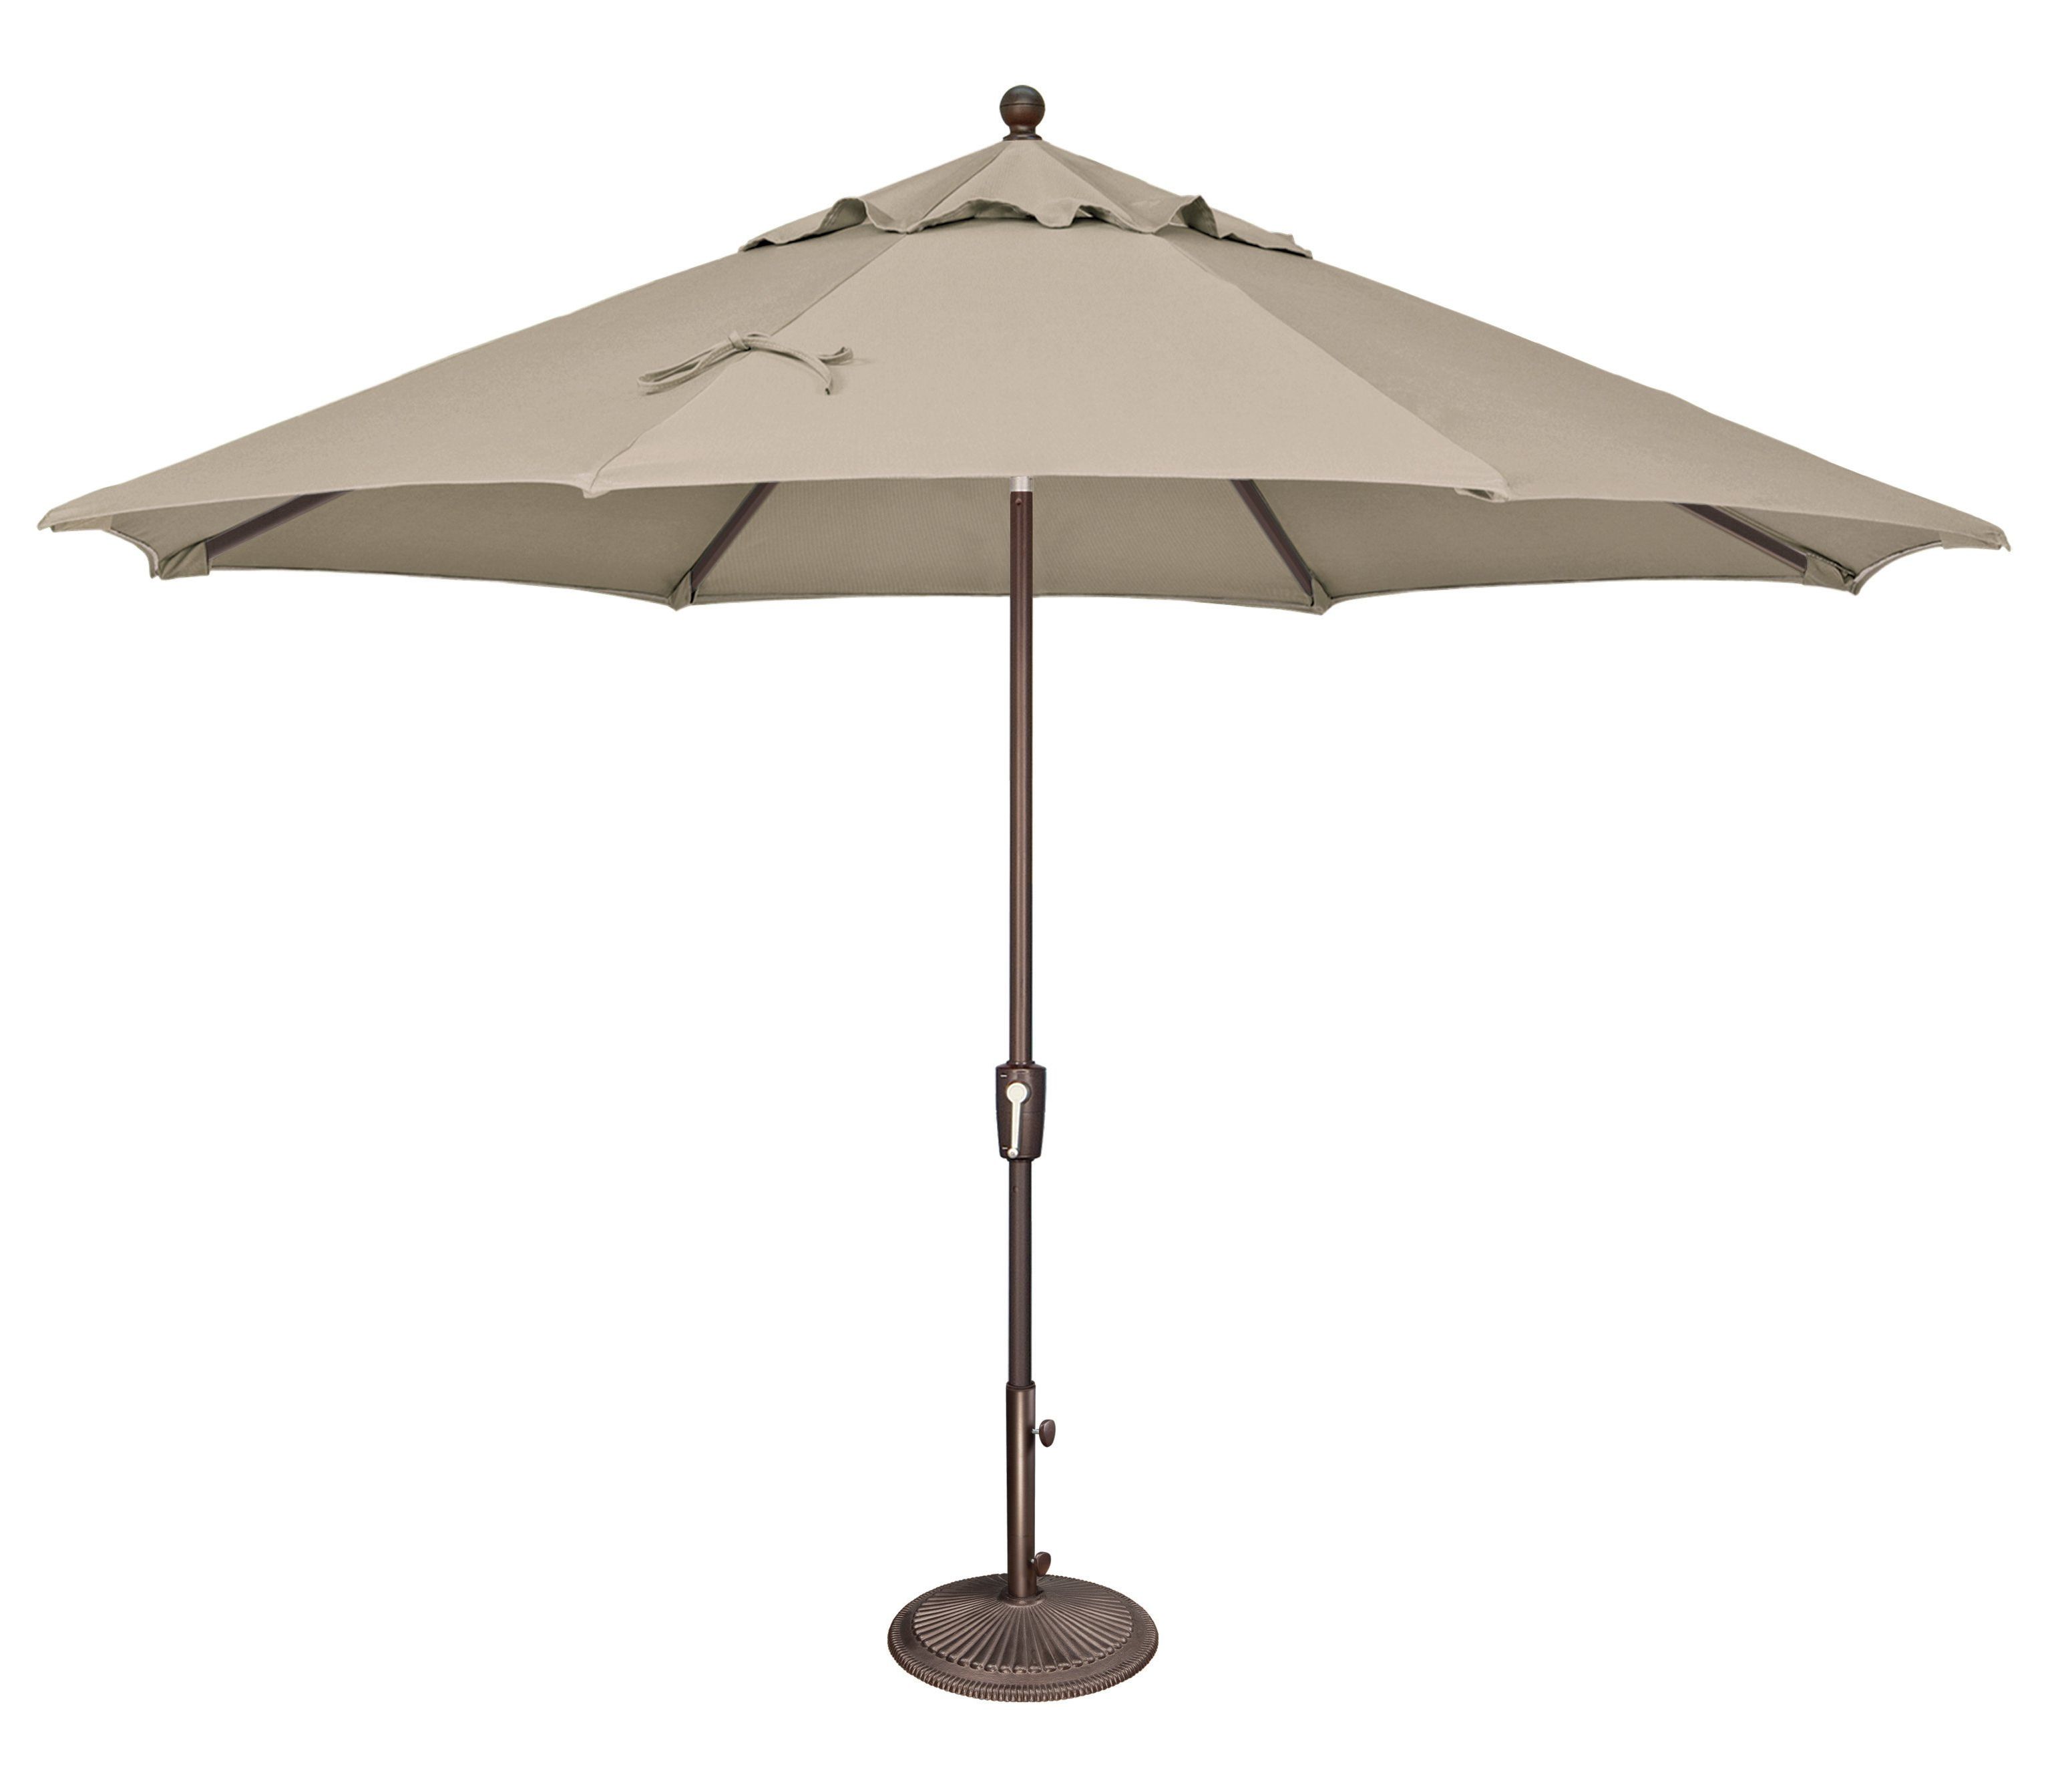 Mcdougal Market Umbrellas For Latest Launceston 11' Market Umbrella (View 5 of 20)